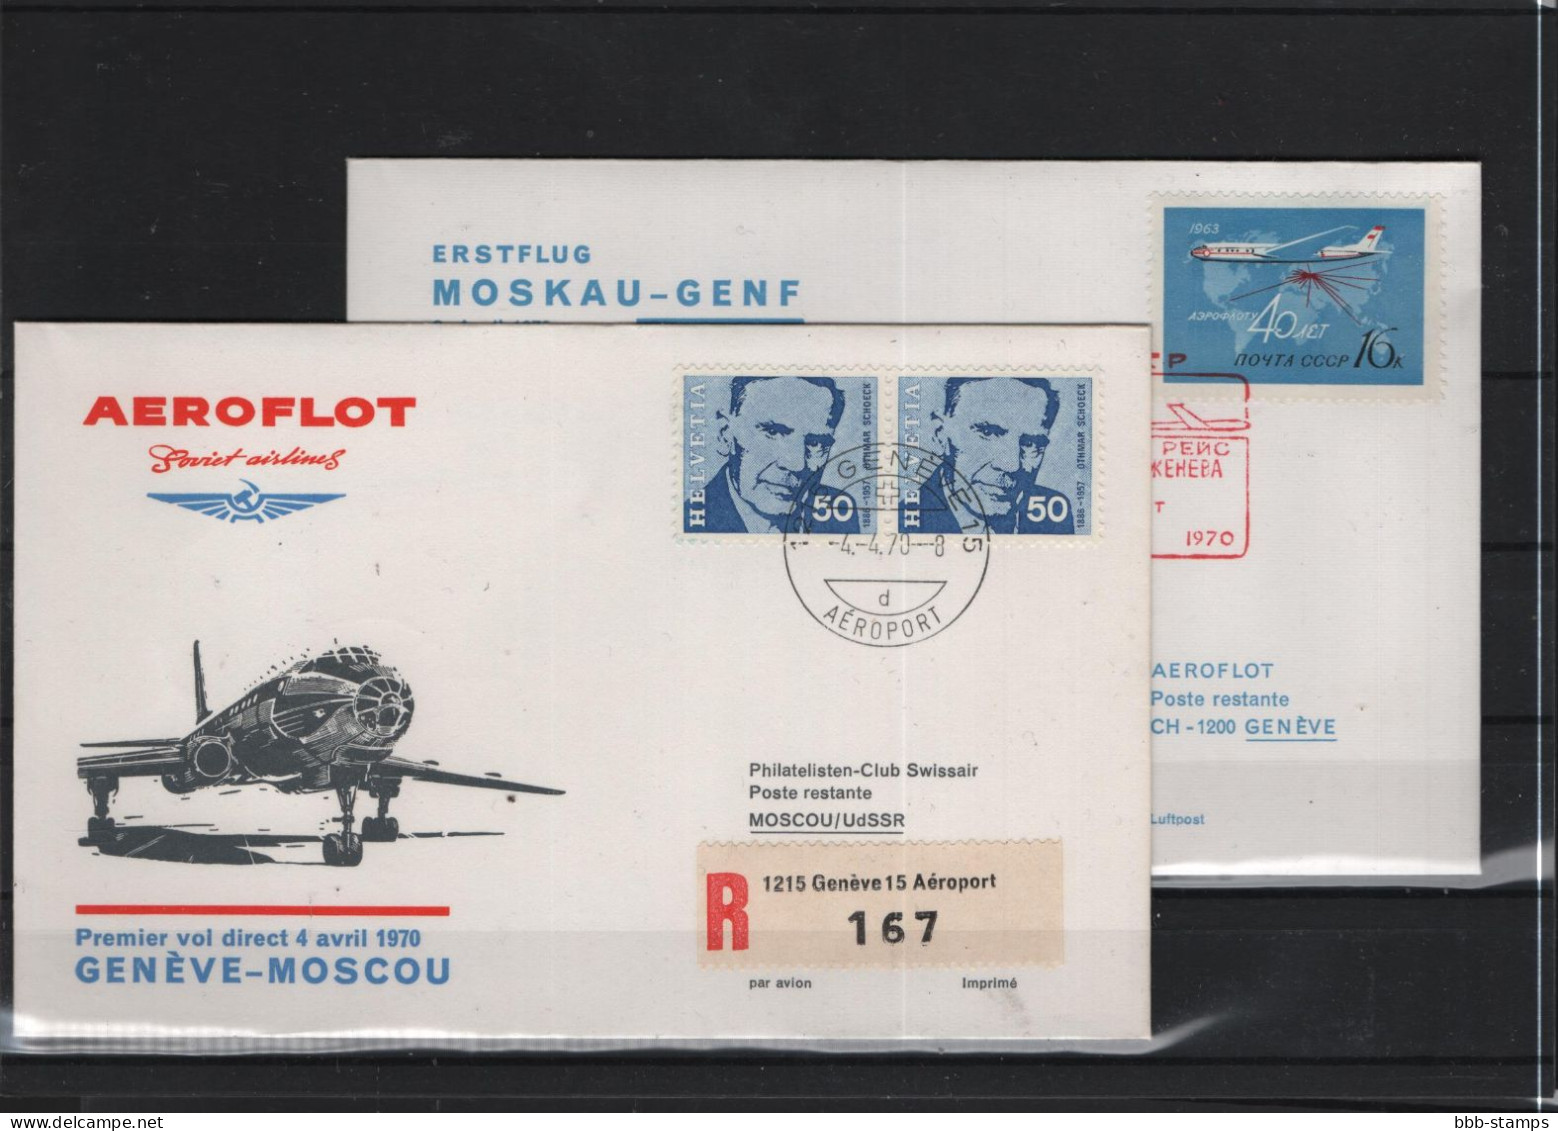 Schweiz Luftpost FFC Aeroflot 3.4.1970 Genf - Moskau VV - Primi Voli